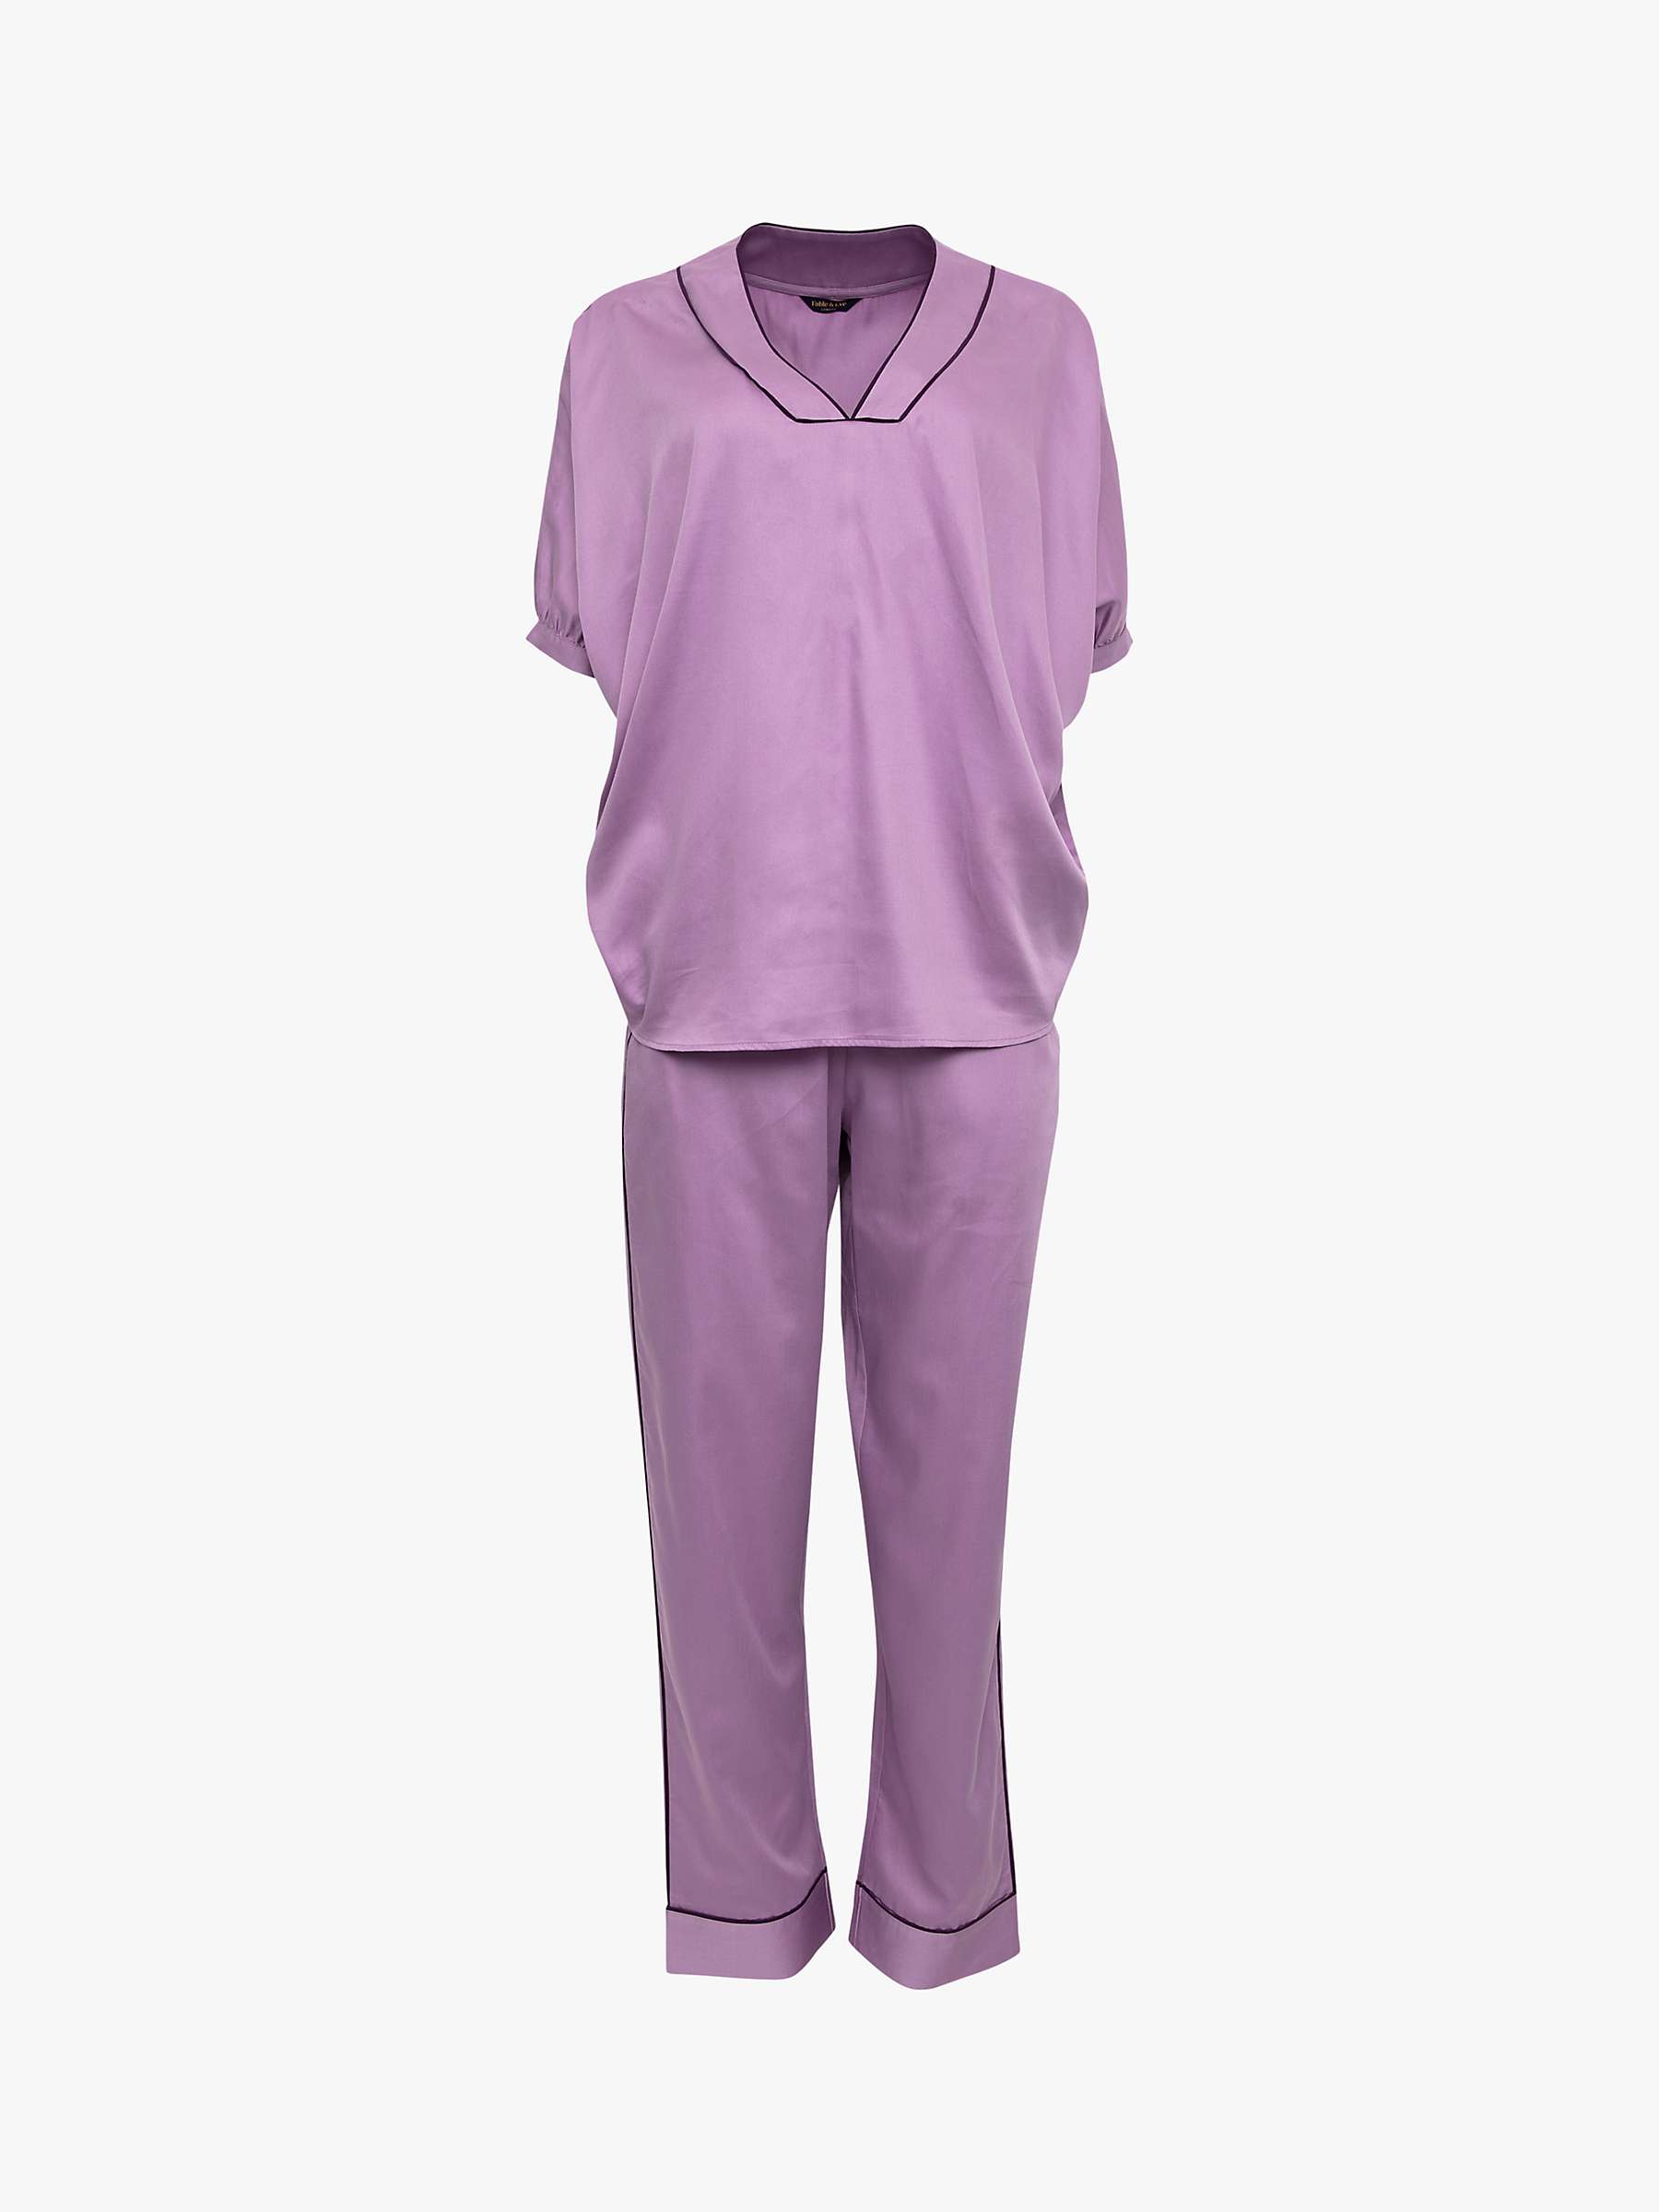 Buy Fable & Eve Silky Pyjama Set, Lilac Online at johnlewis.com